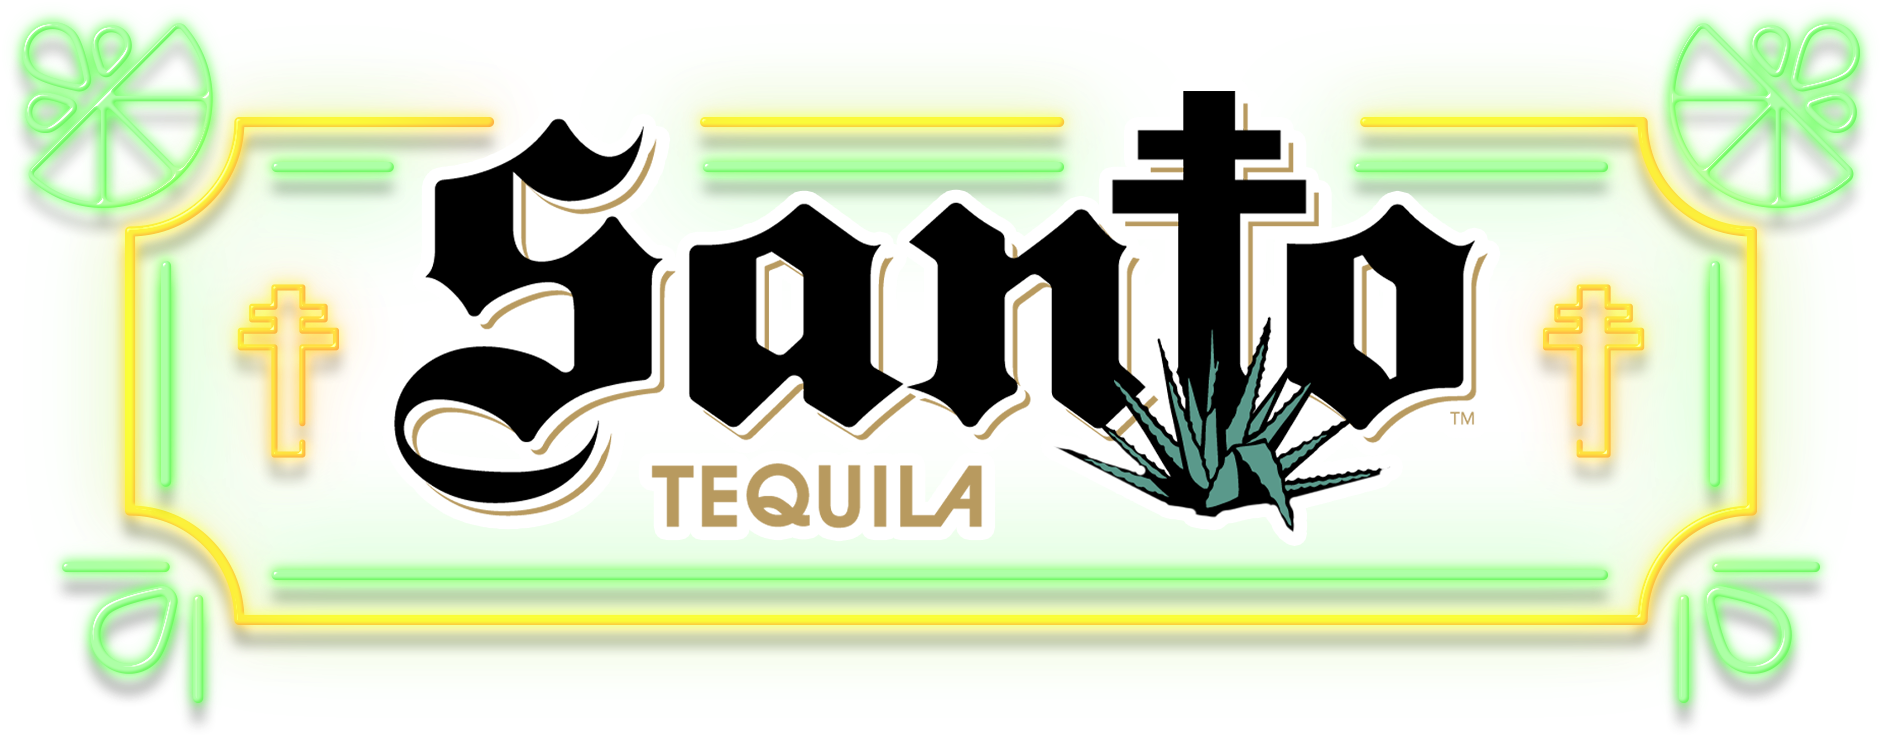 https://guysrestaurantreboot.com/wp-content/uploads/2021/05/Santos-Tequila-Title.png